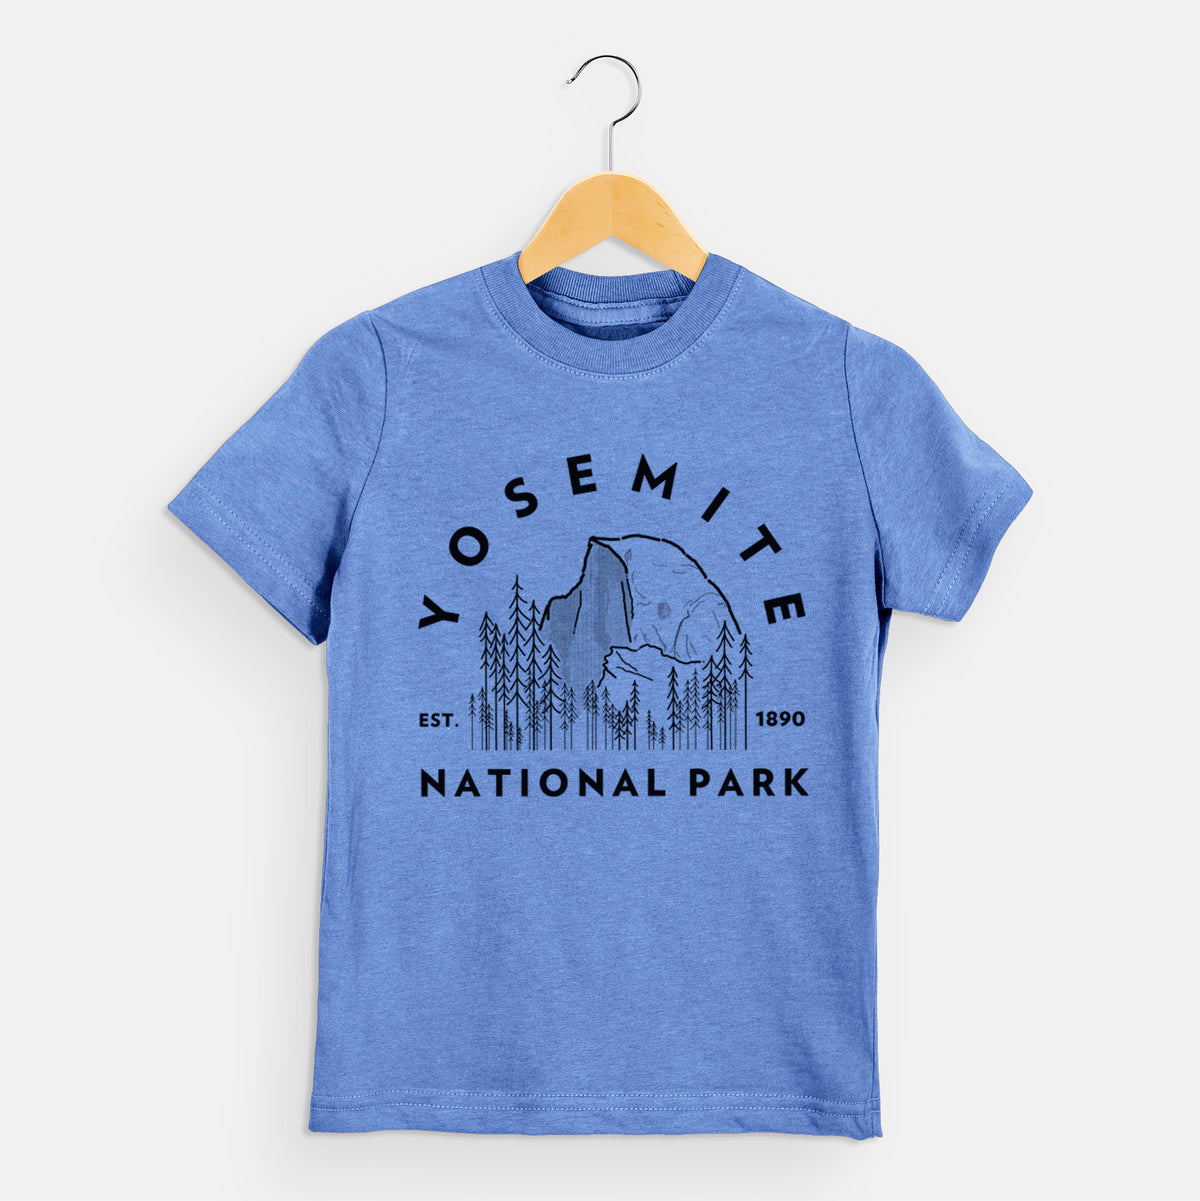 Yosemite National Park - Kids Shirt